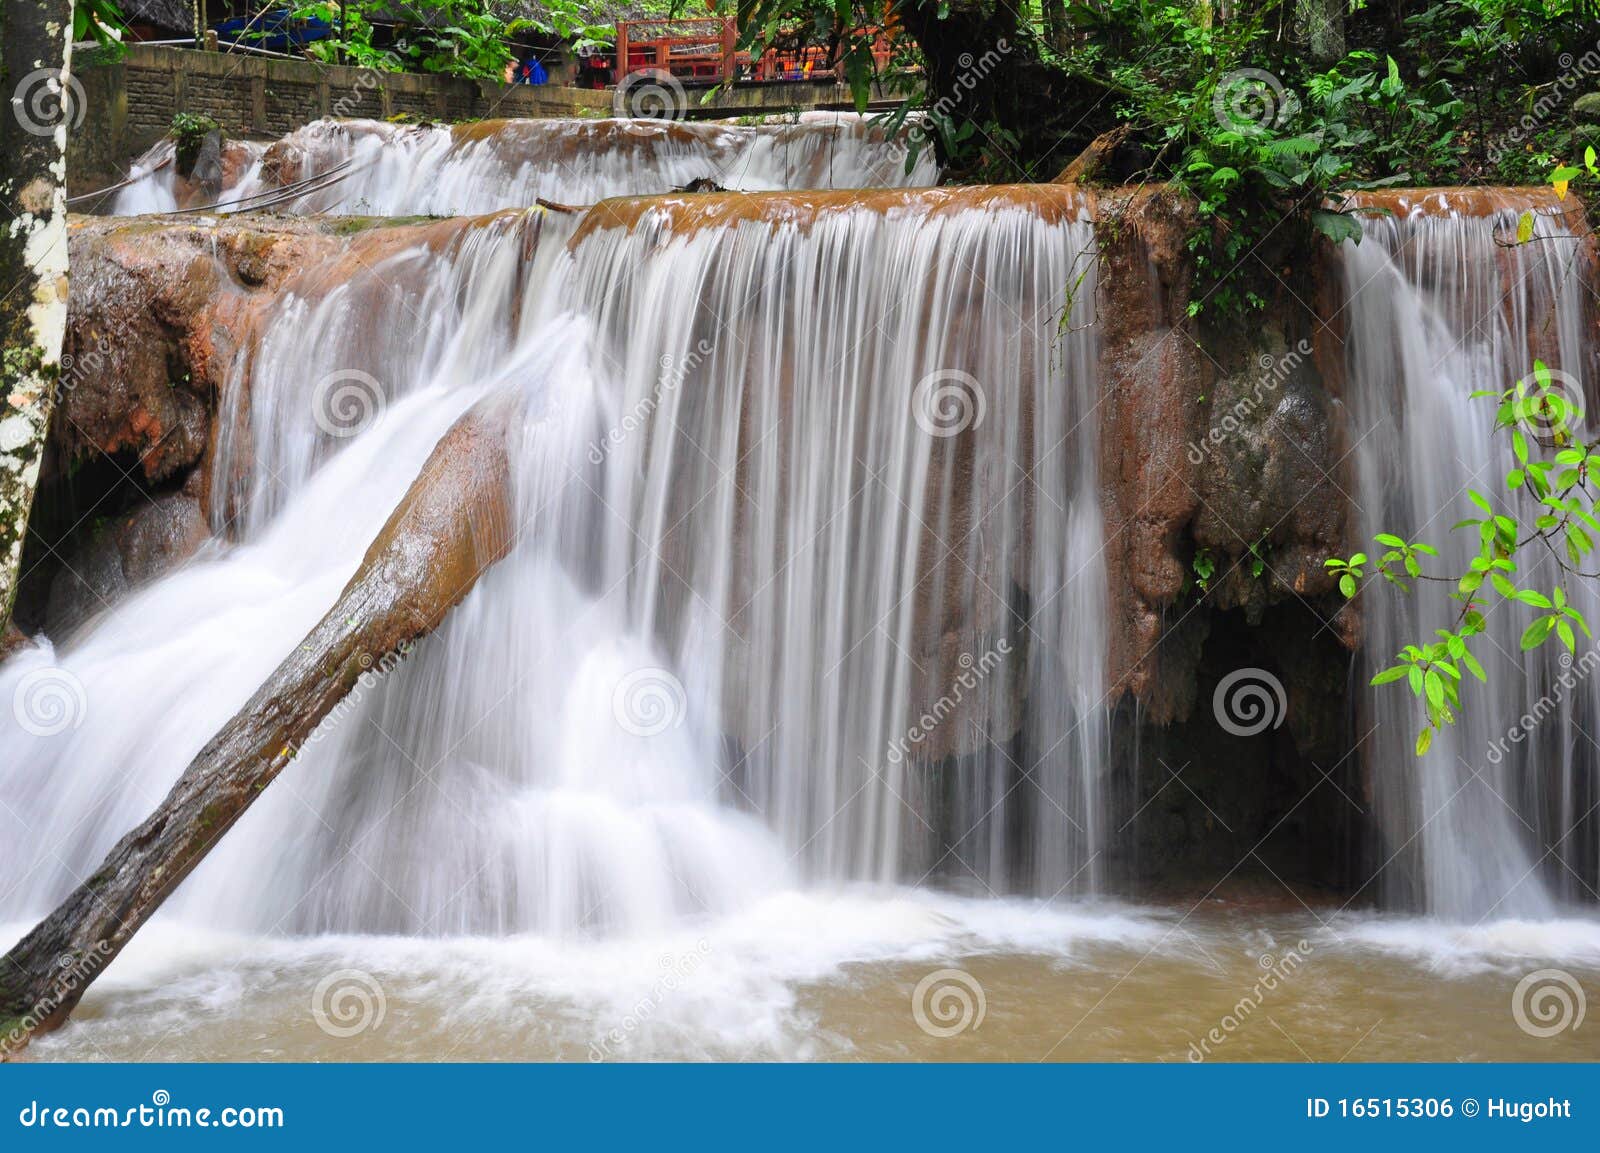 agua azul waterfall, mexico